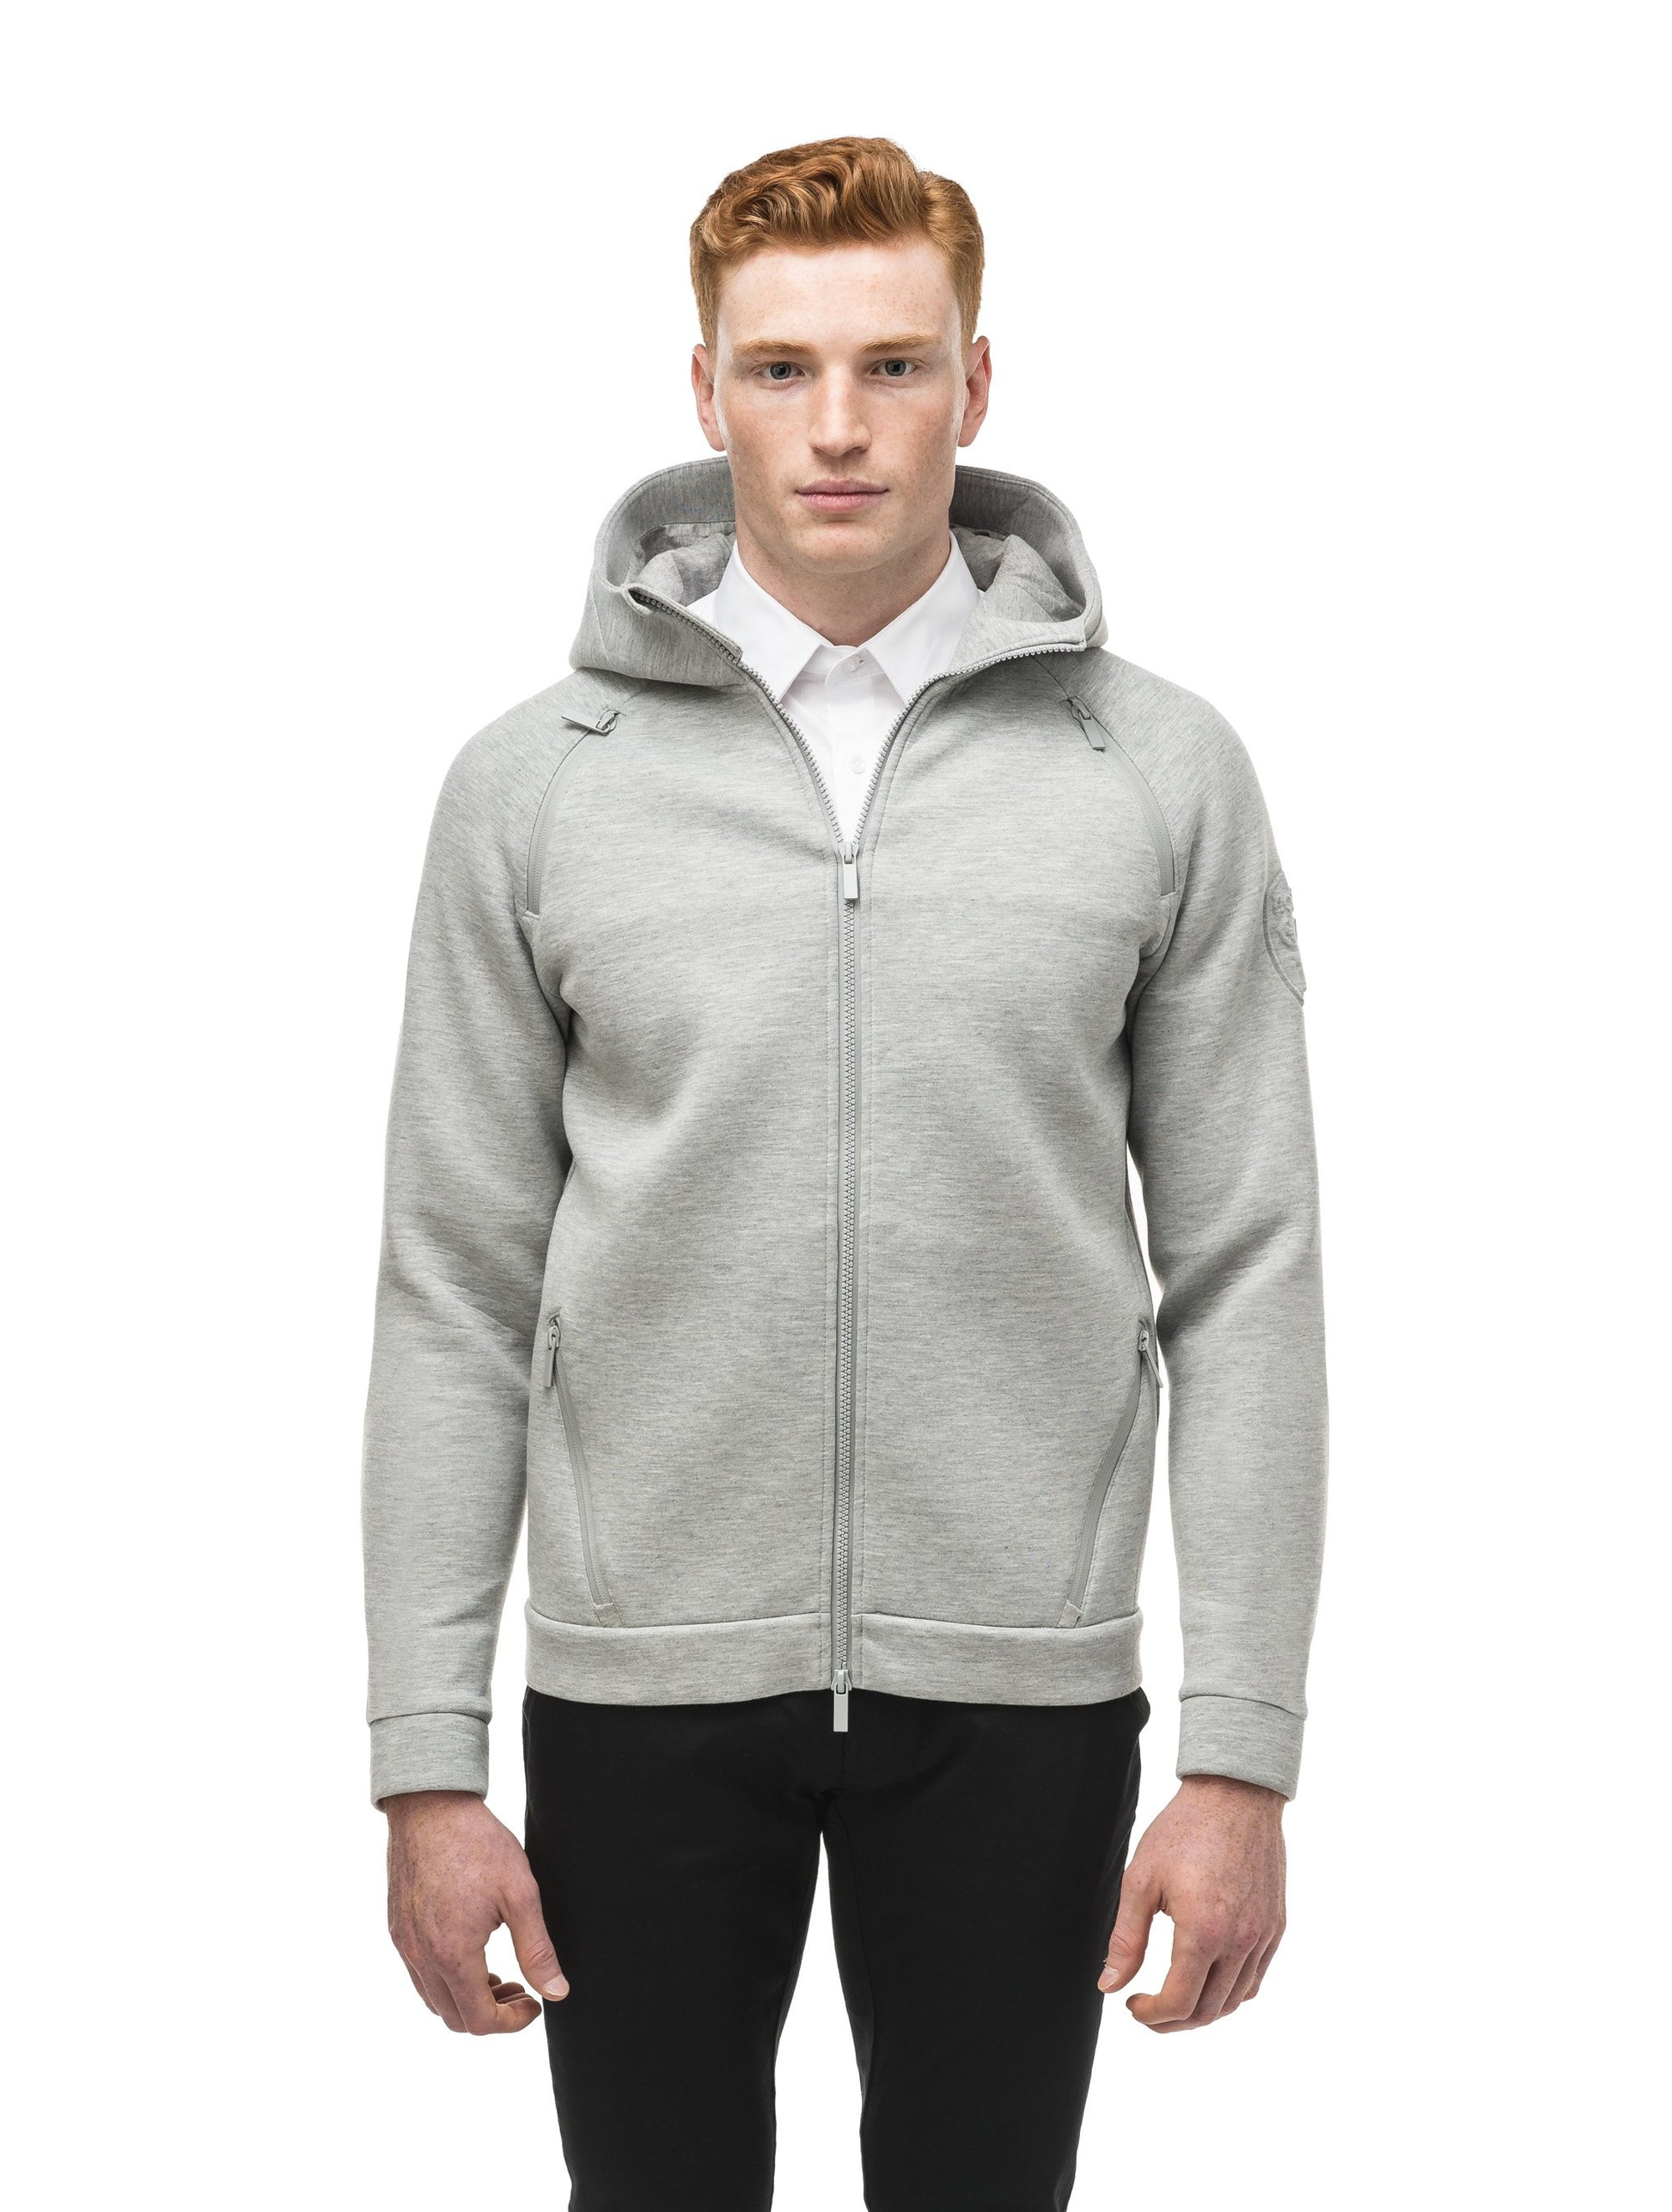 Men's premium rayon polyamide bonded jersey fabrication hoodie with exposed zipper in Grey Melange